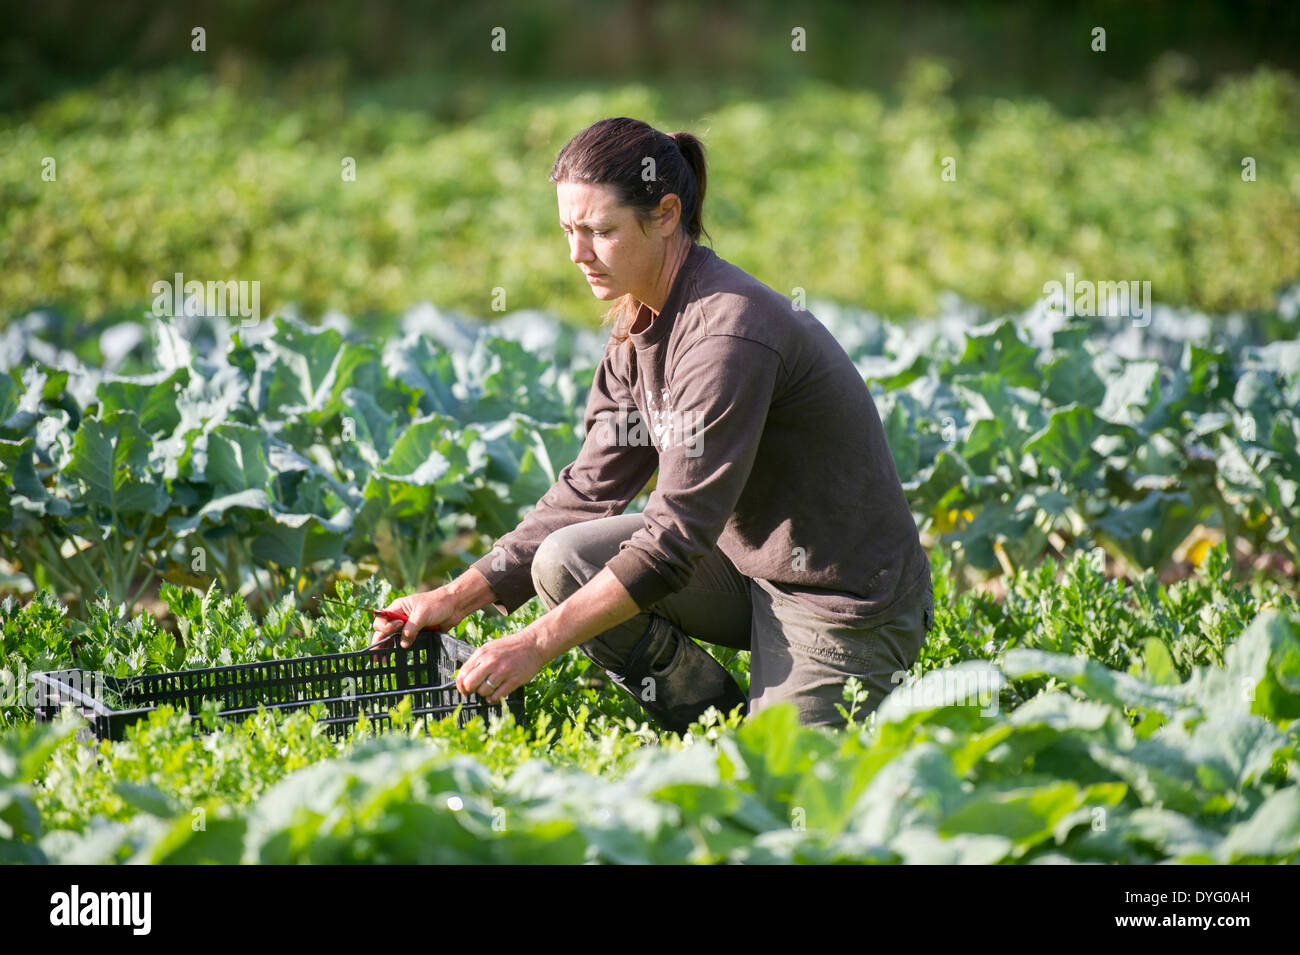 woman working in field Lisbon Falls, ME Stock Photo